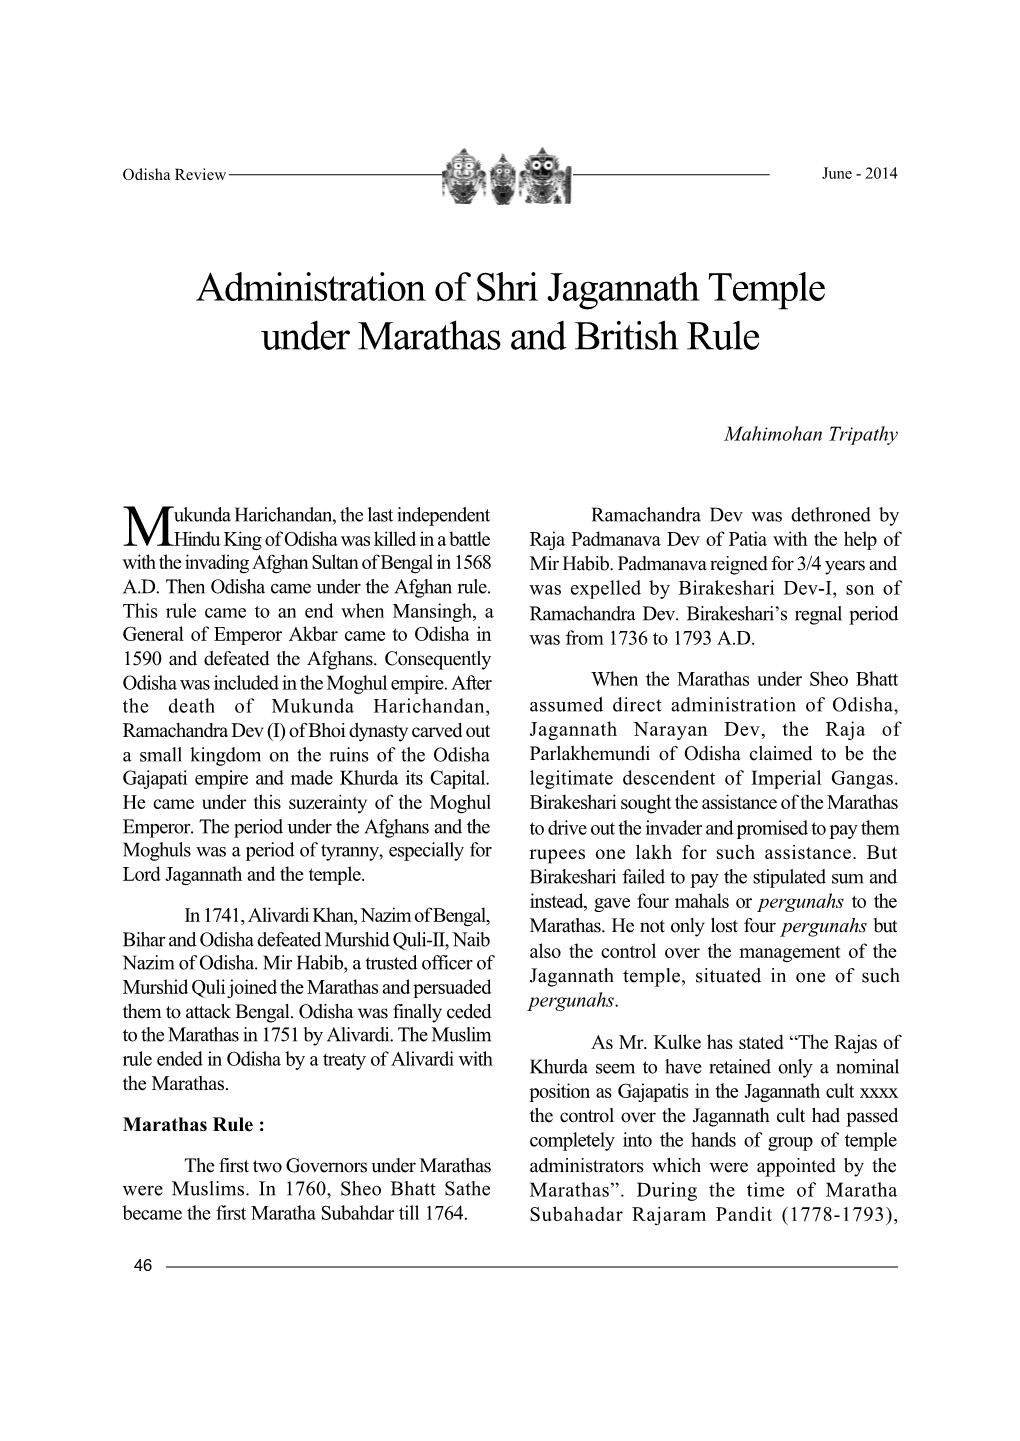 Administration of Shri Jagannath Temple Under Marathas and British Rule